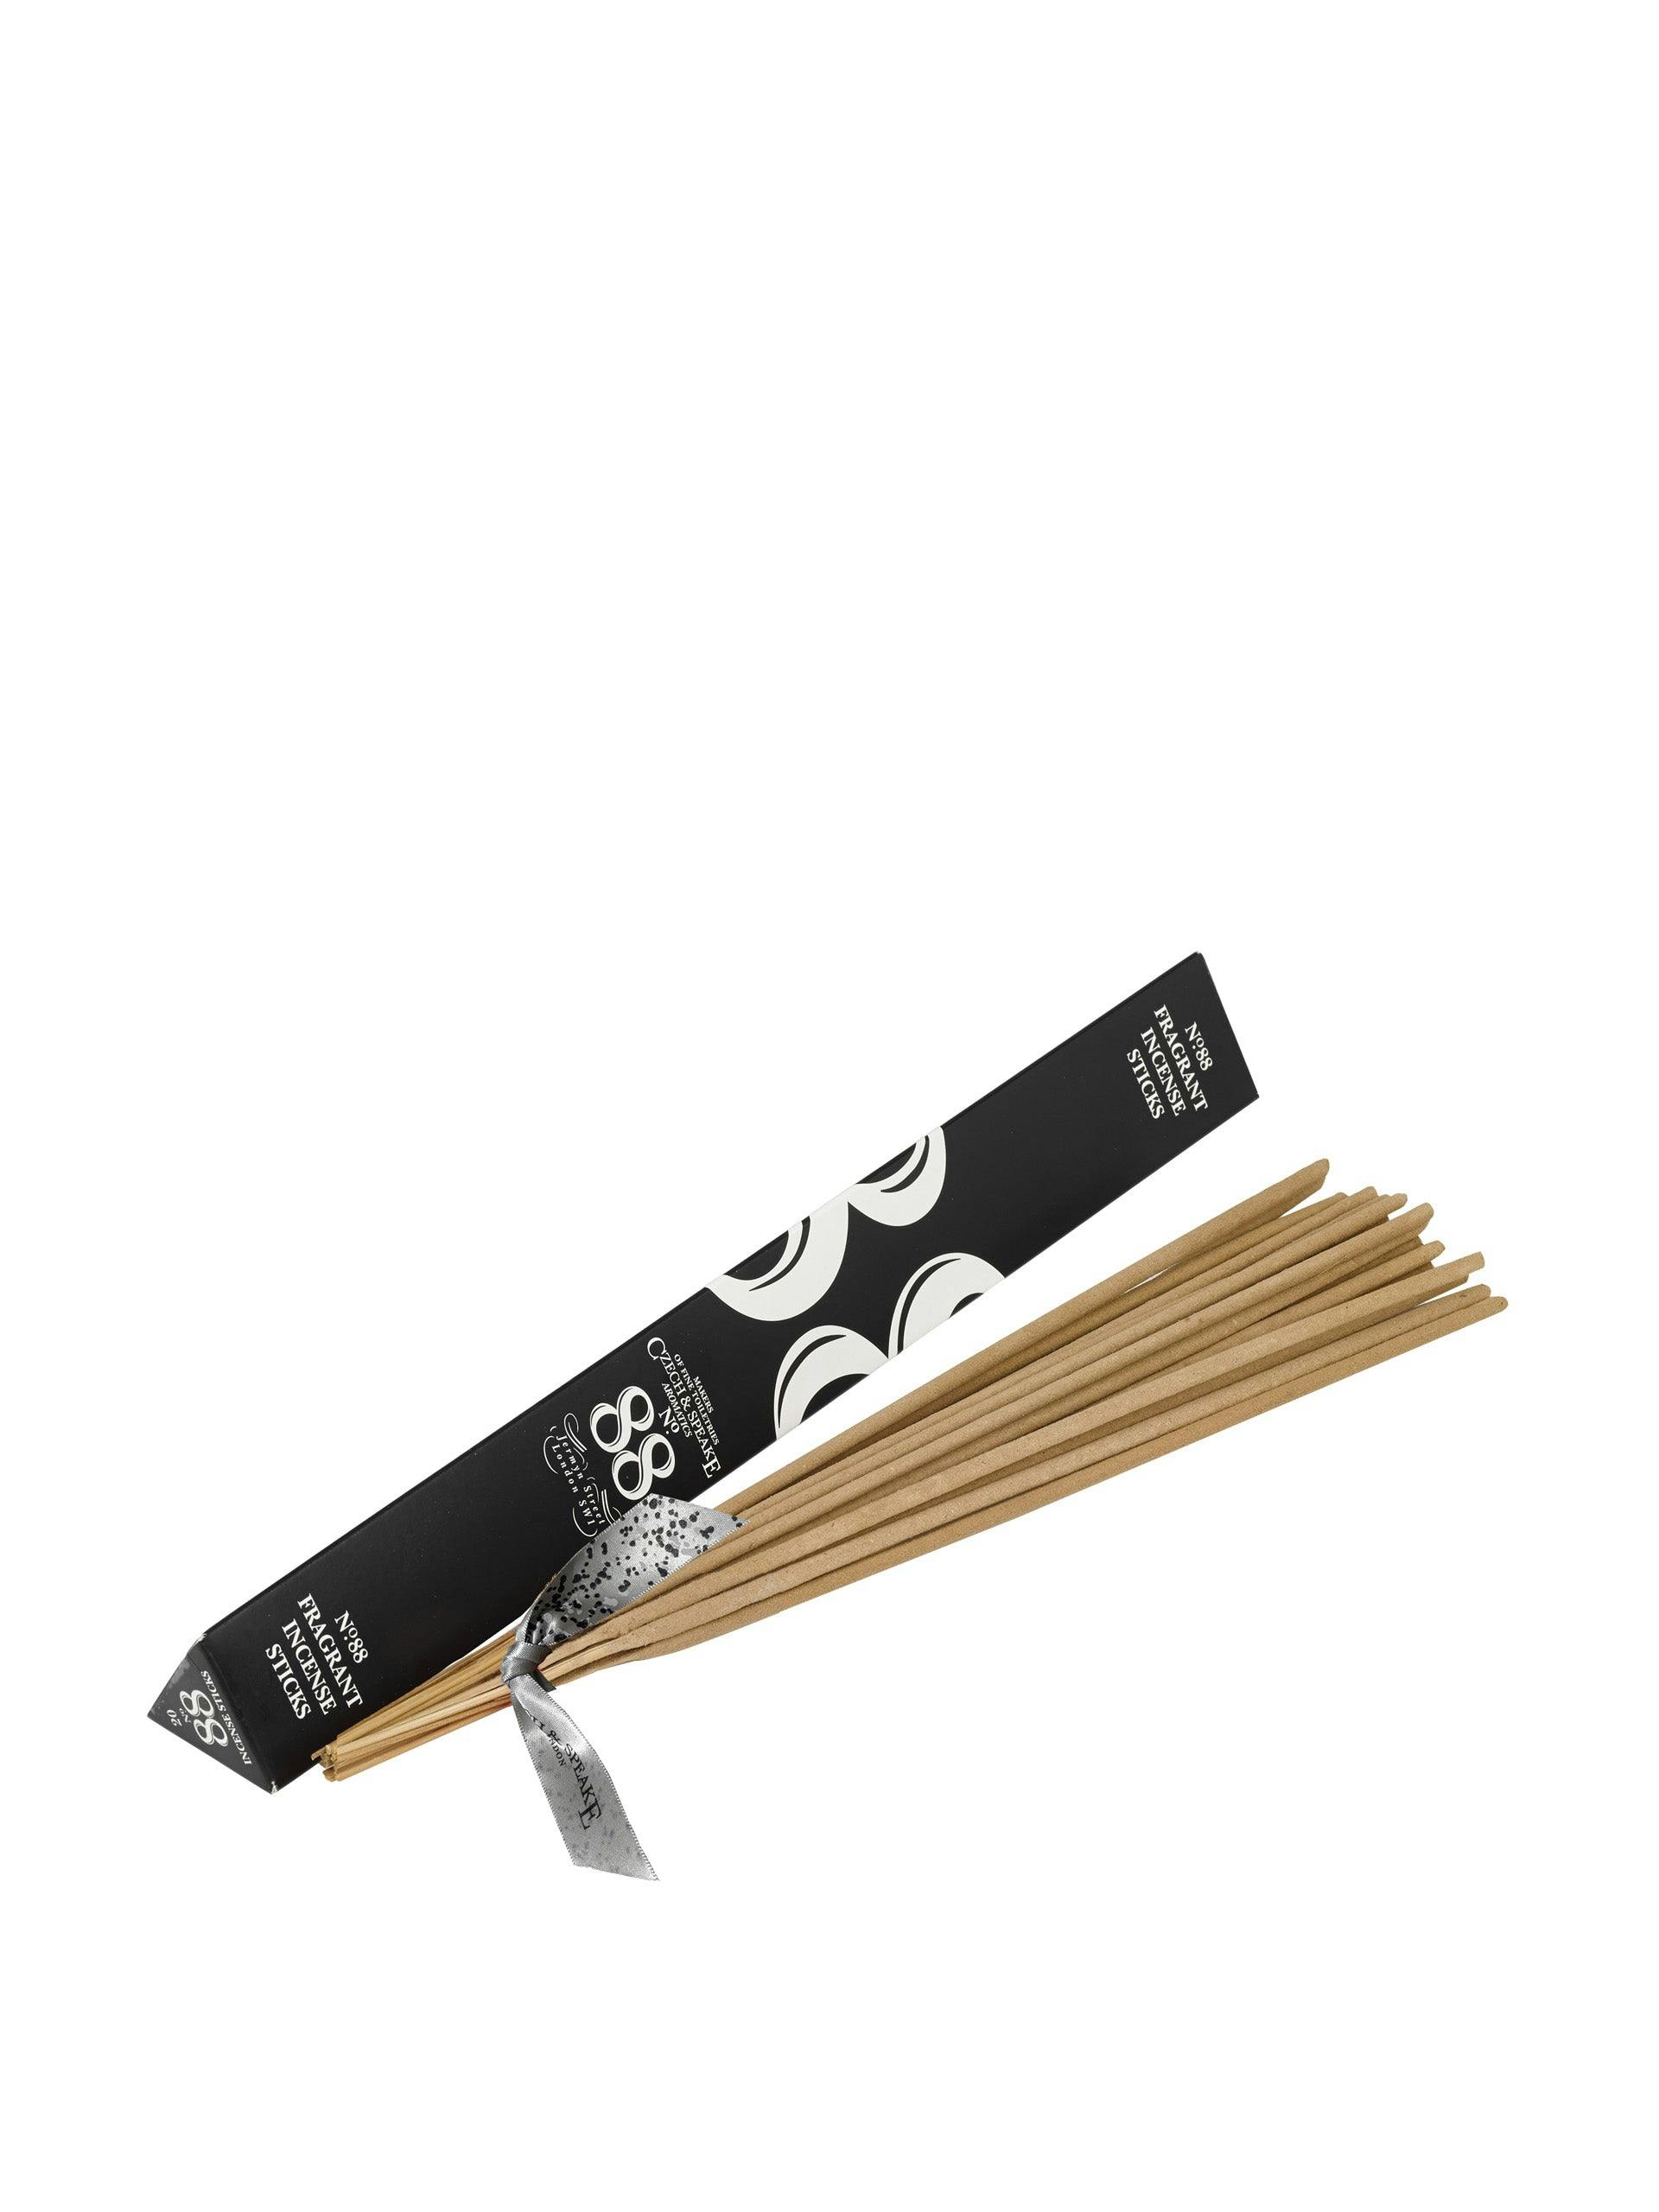 No.88 incense sticks (pack of 20)